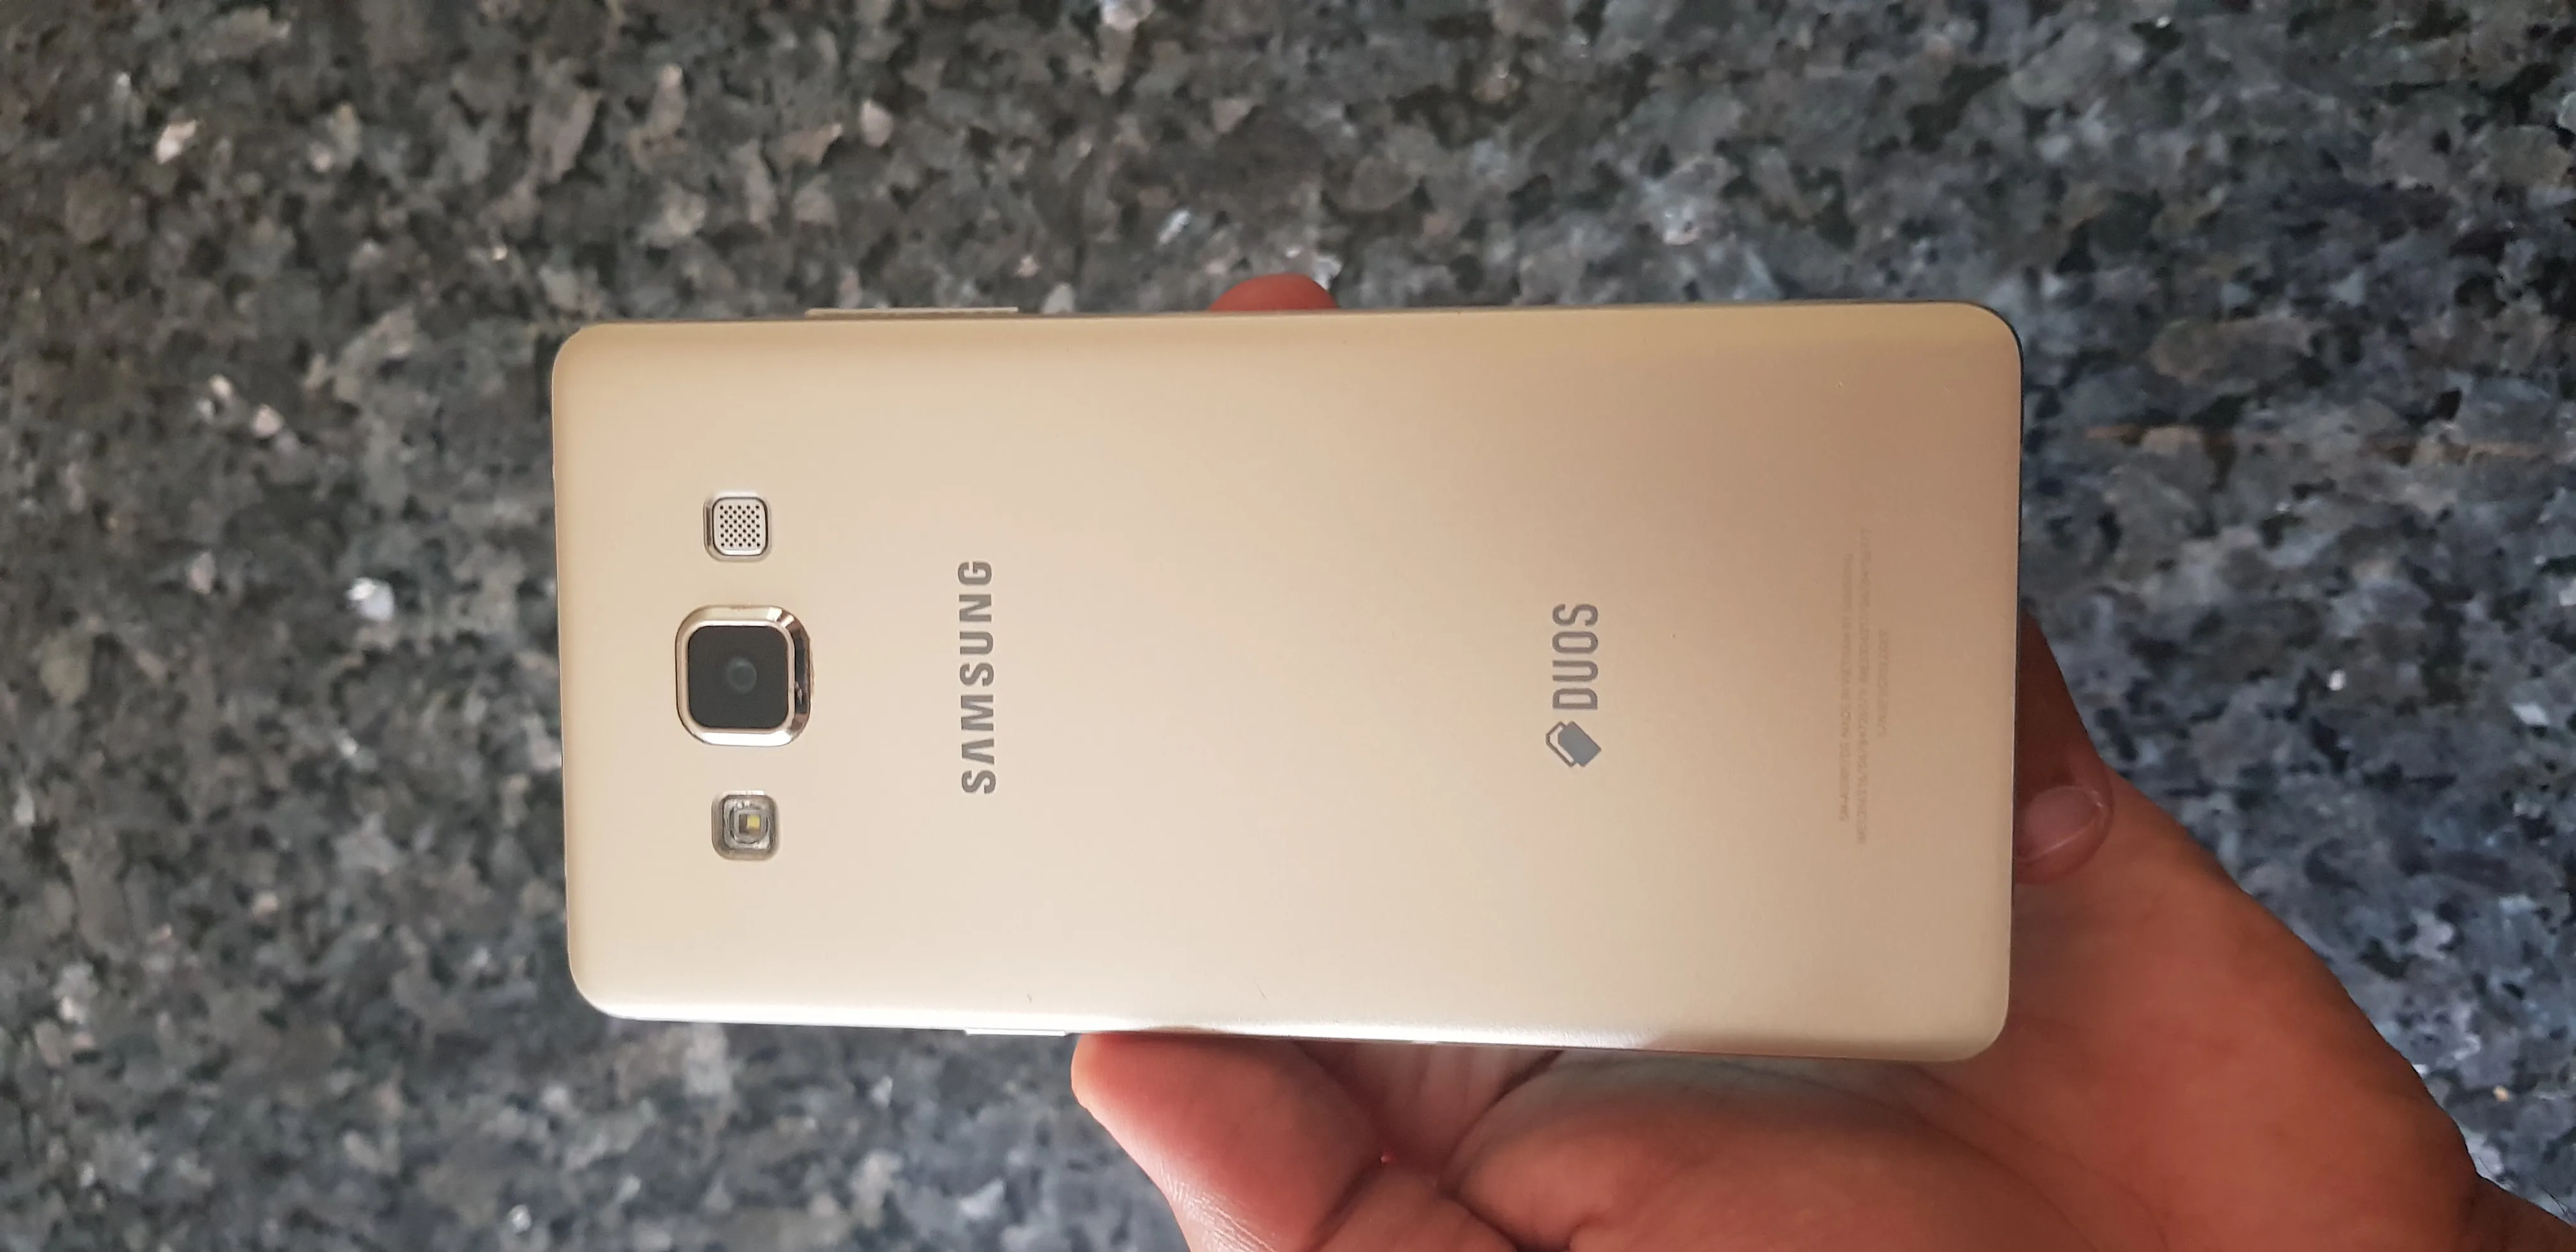 Samsung Galaxy GALAXY A5 9/10 rare gold colour mint condition - photo 4